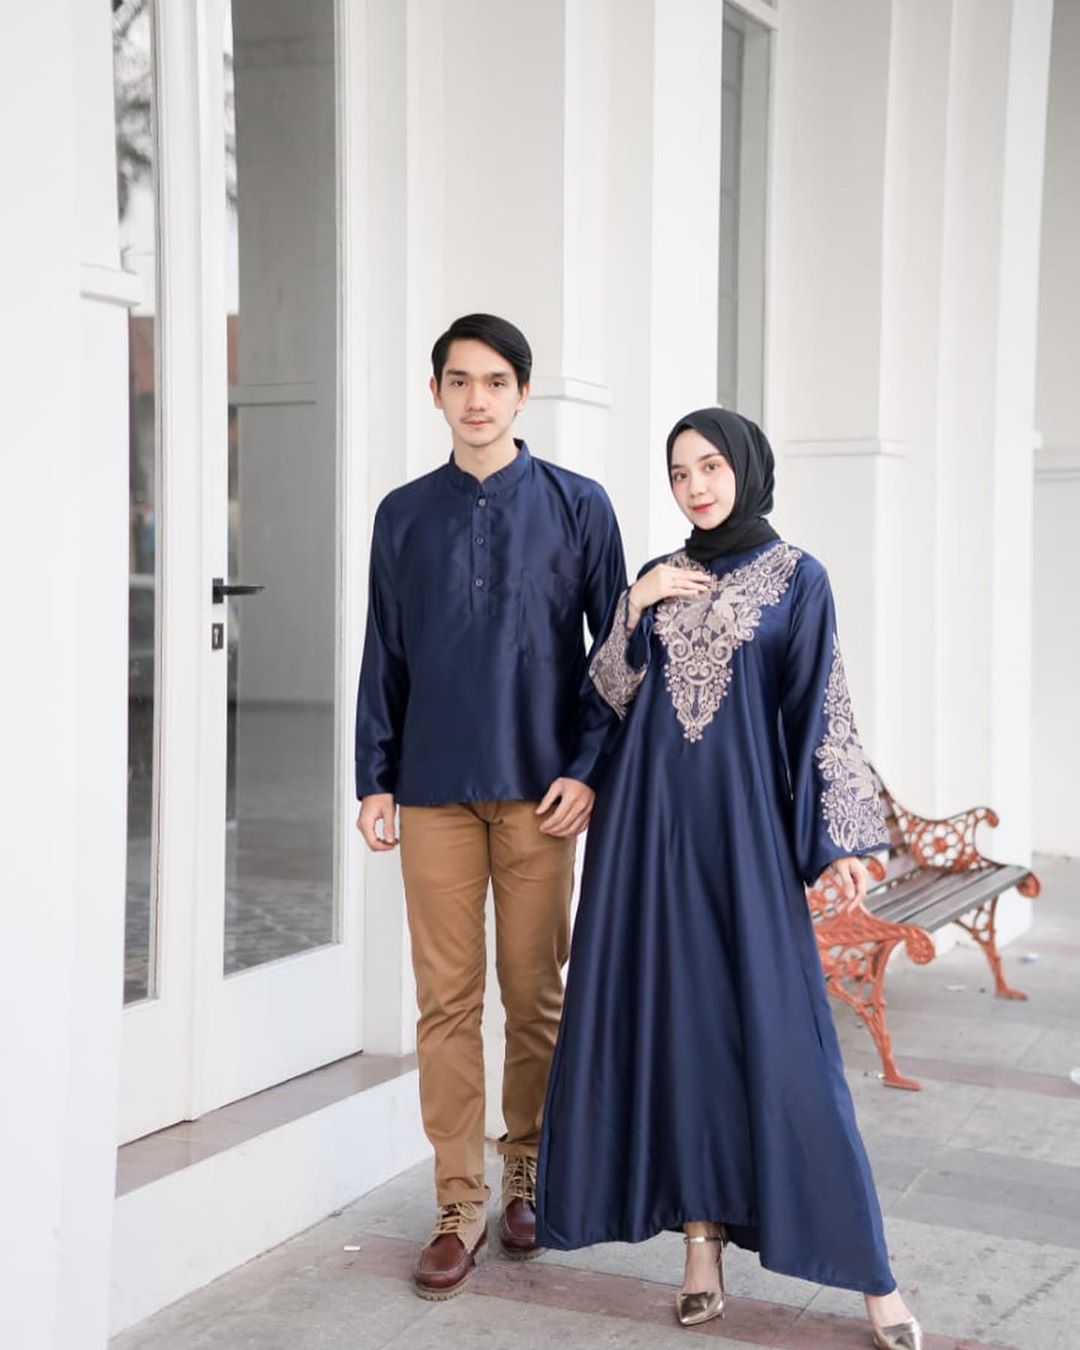 Baju Remaja Kekinian Arsarah Couple Bahan Maxmara Dapat Baju Gamis Wanita Baju Kemeja Pria Baju Atasan Casual Fashion Lengan Panjang Baju Modern Muslim Pakaian Perempuan Fashionable Stelan Termurah Simple Modis